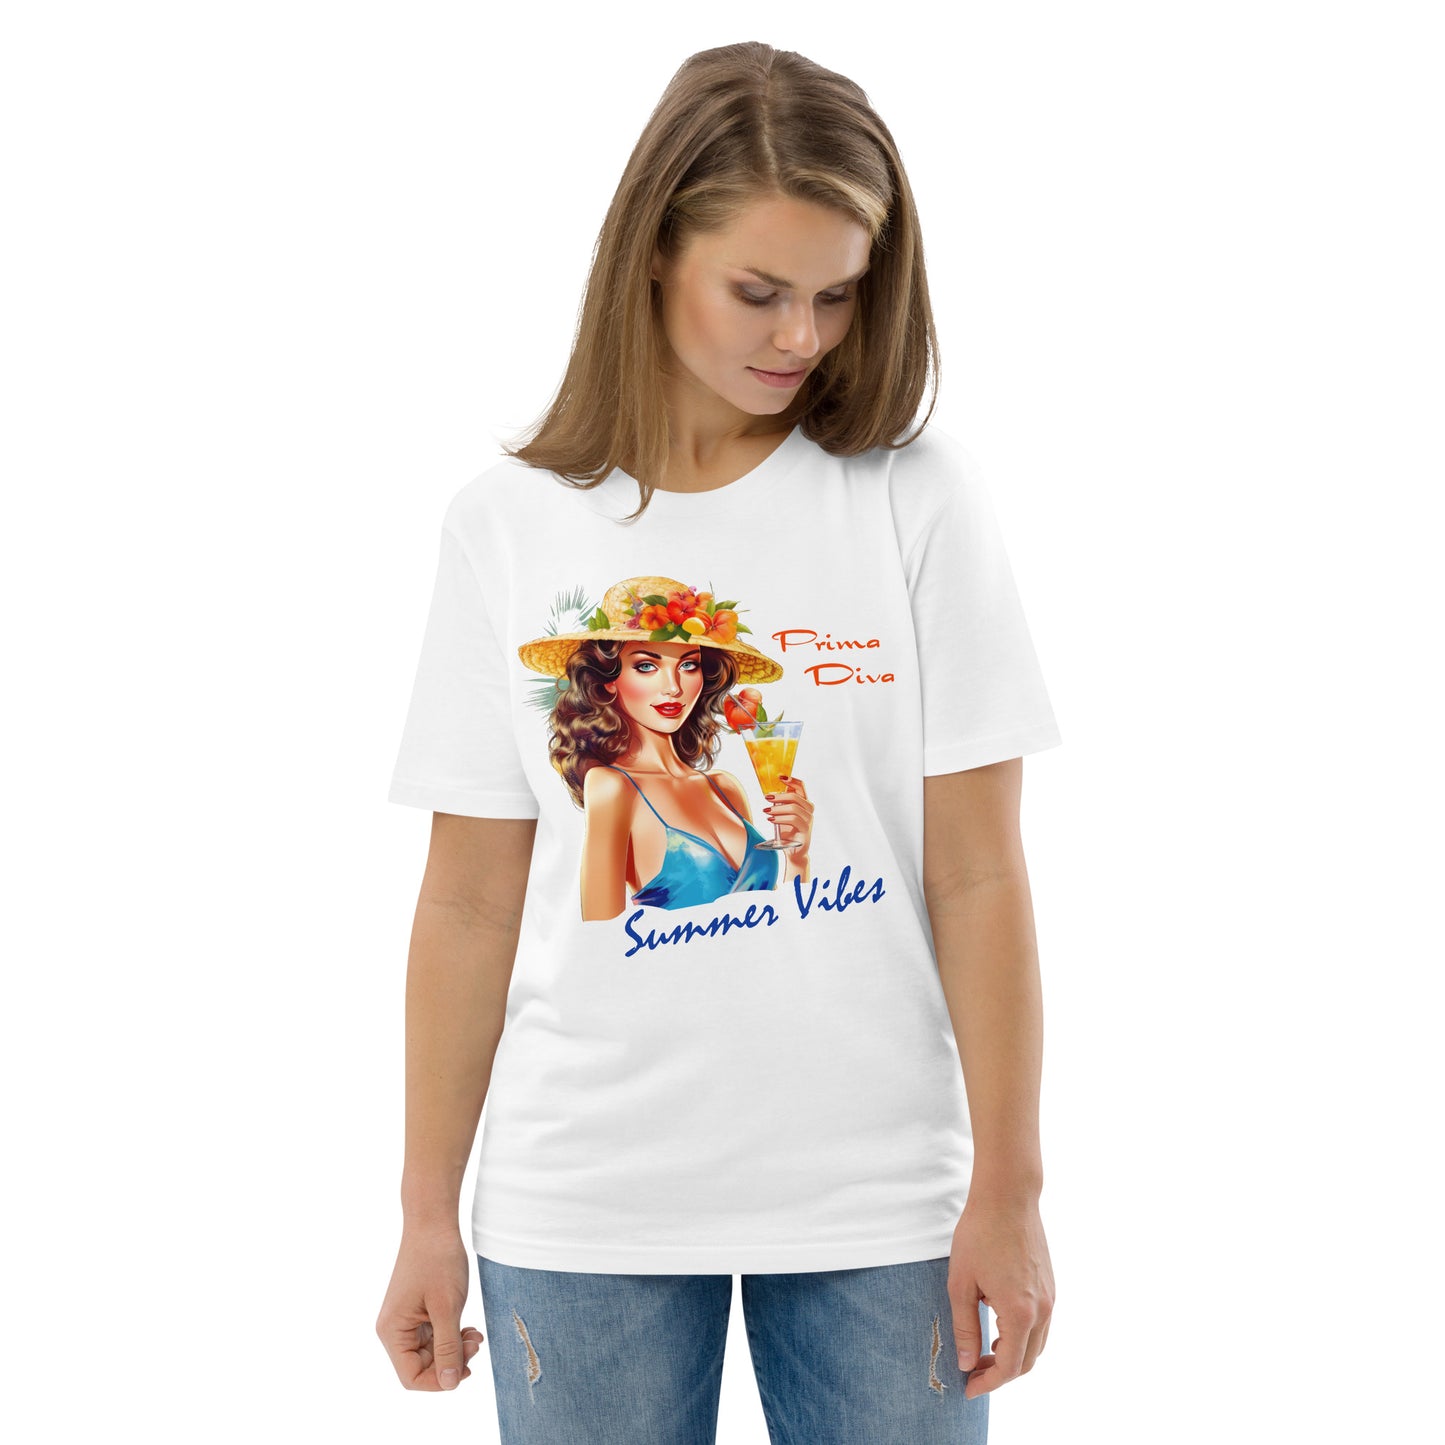 Prima Diva Summer Vibes - Bio-Baumwoll-T-Shirt